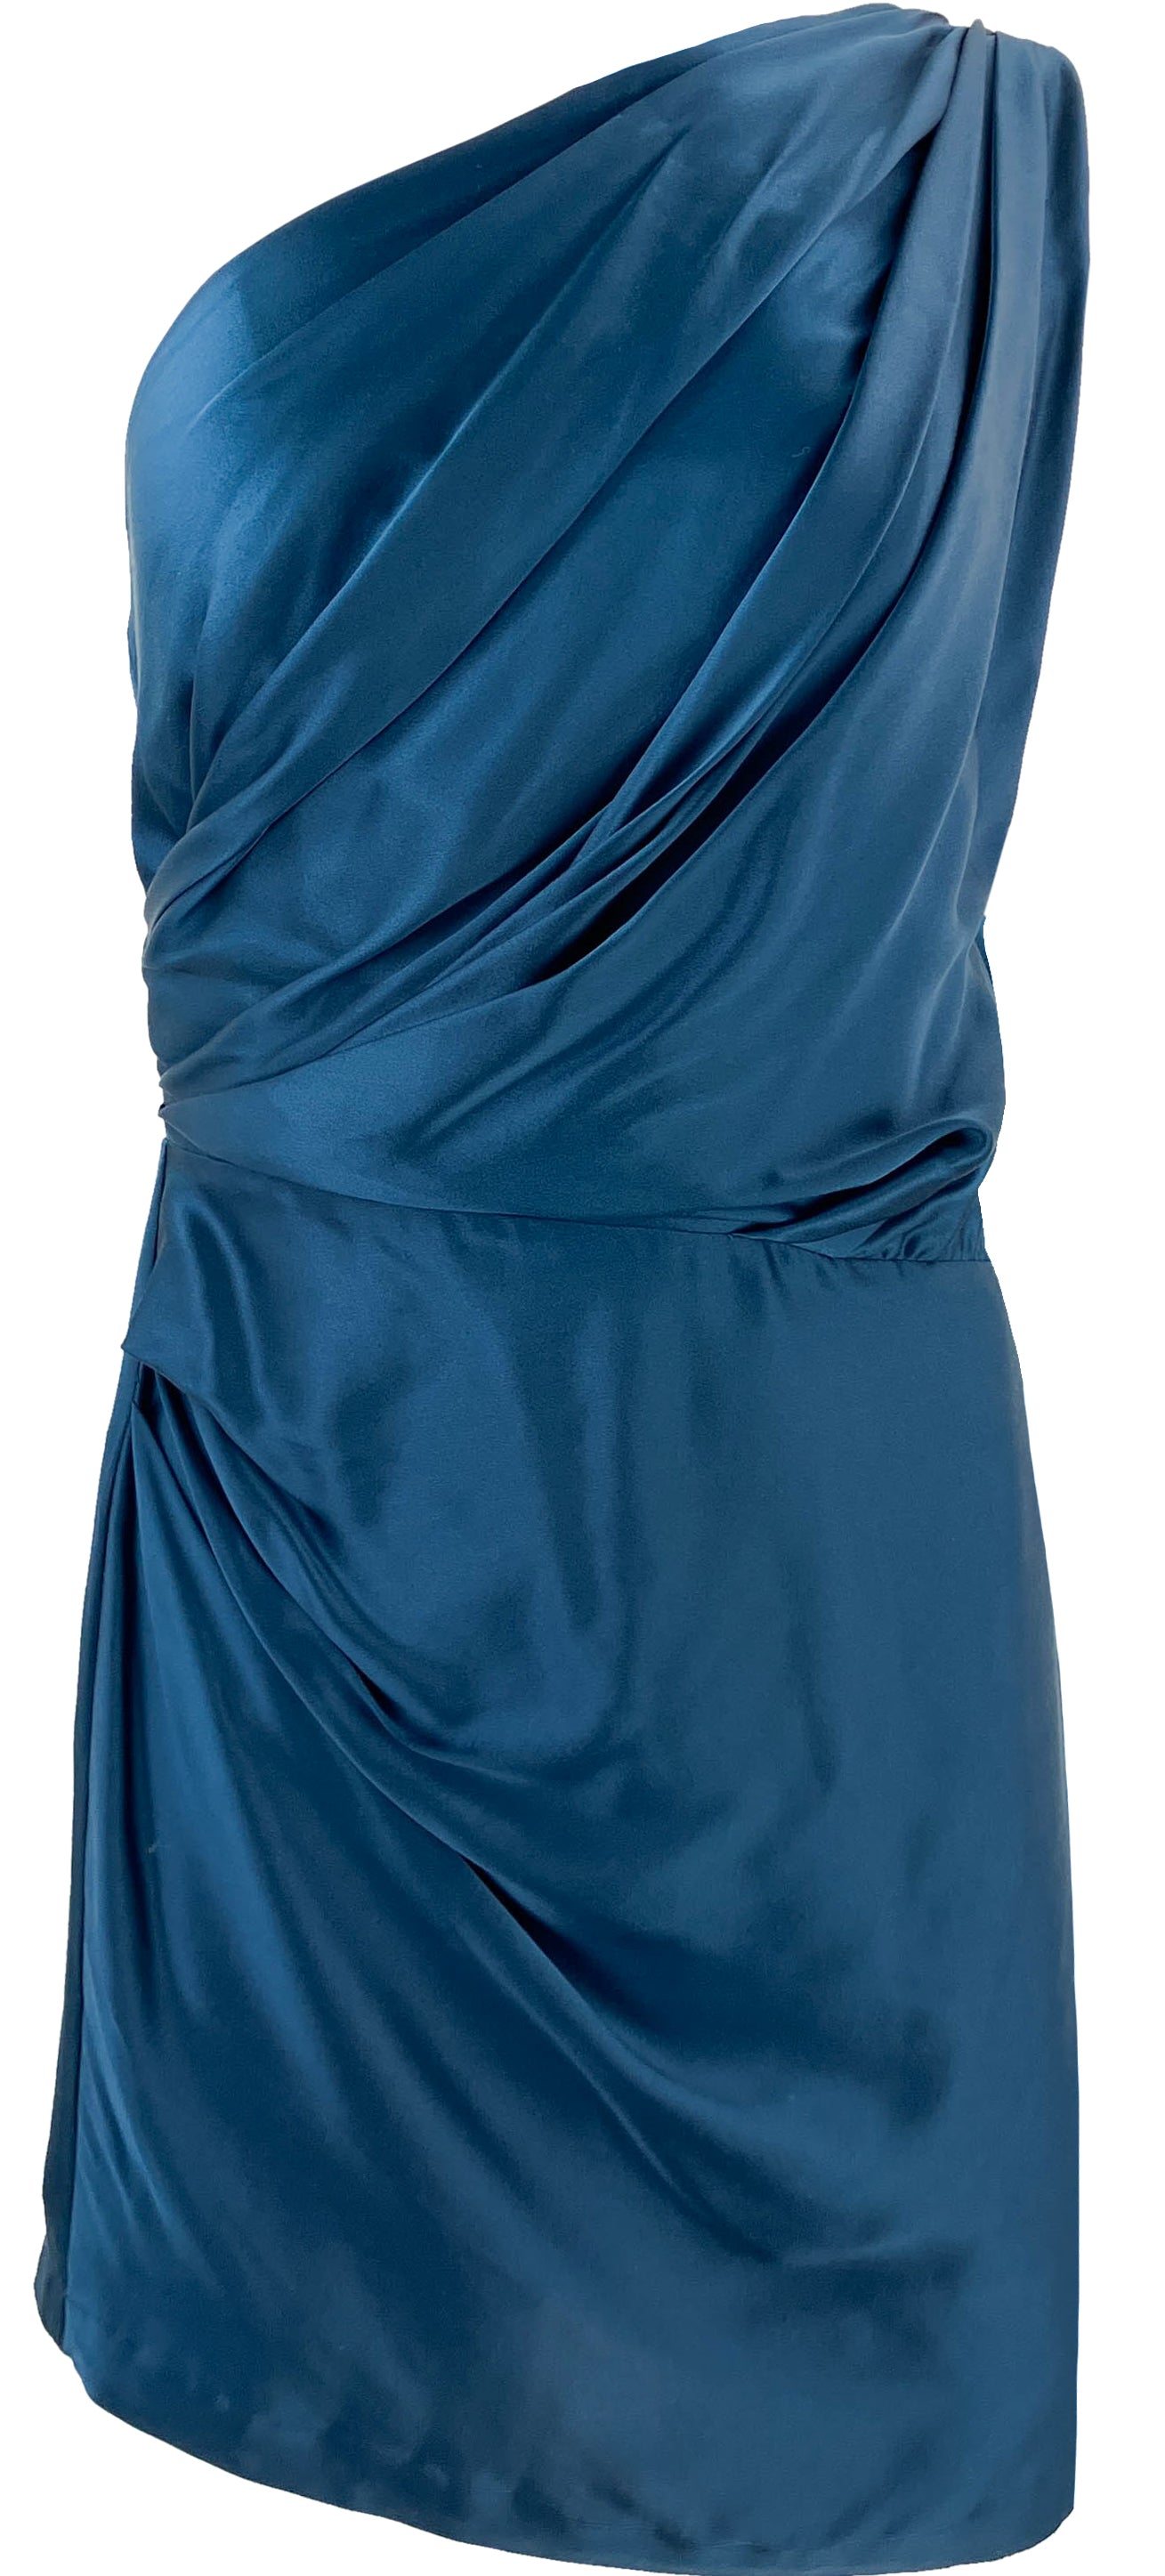 The Sei Asymmetric Draped Mini Dress in Peacock - Discounts on The Sei at UAL